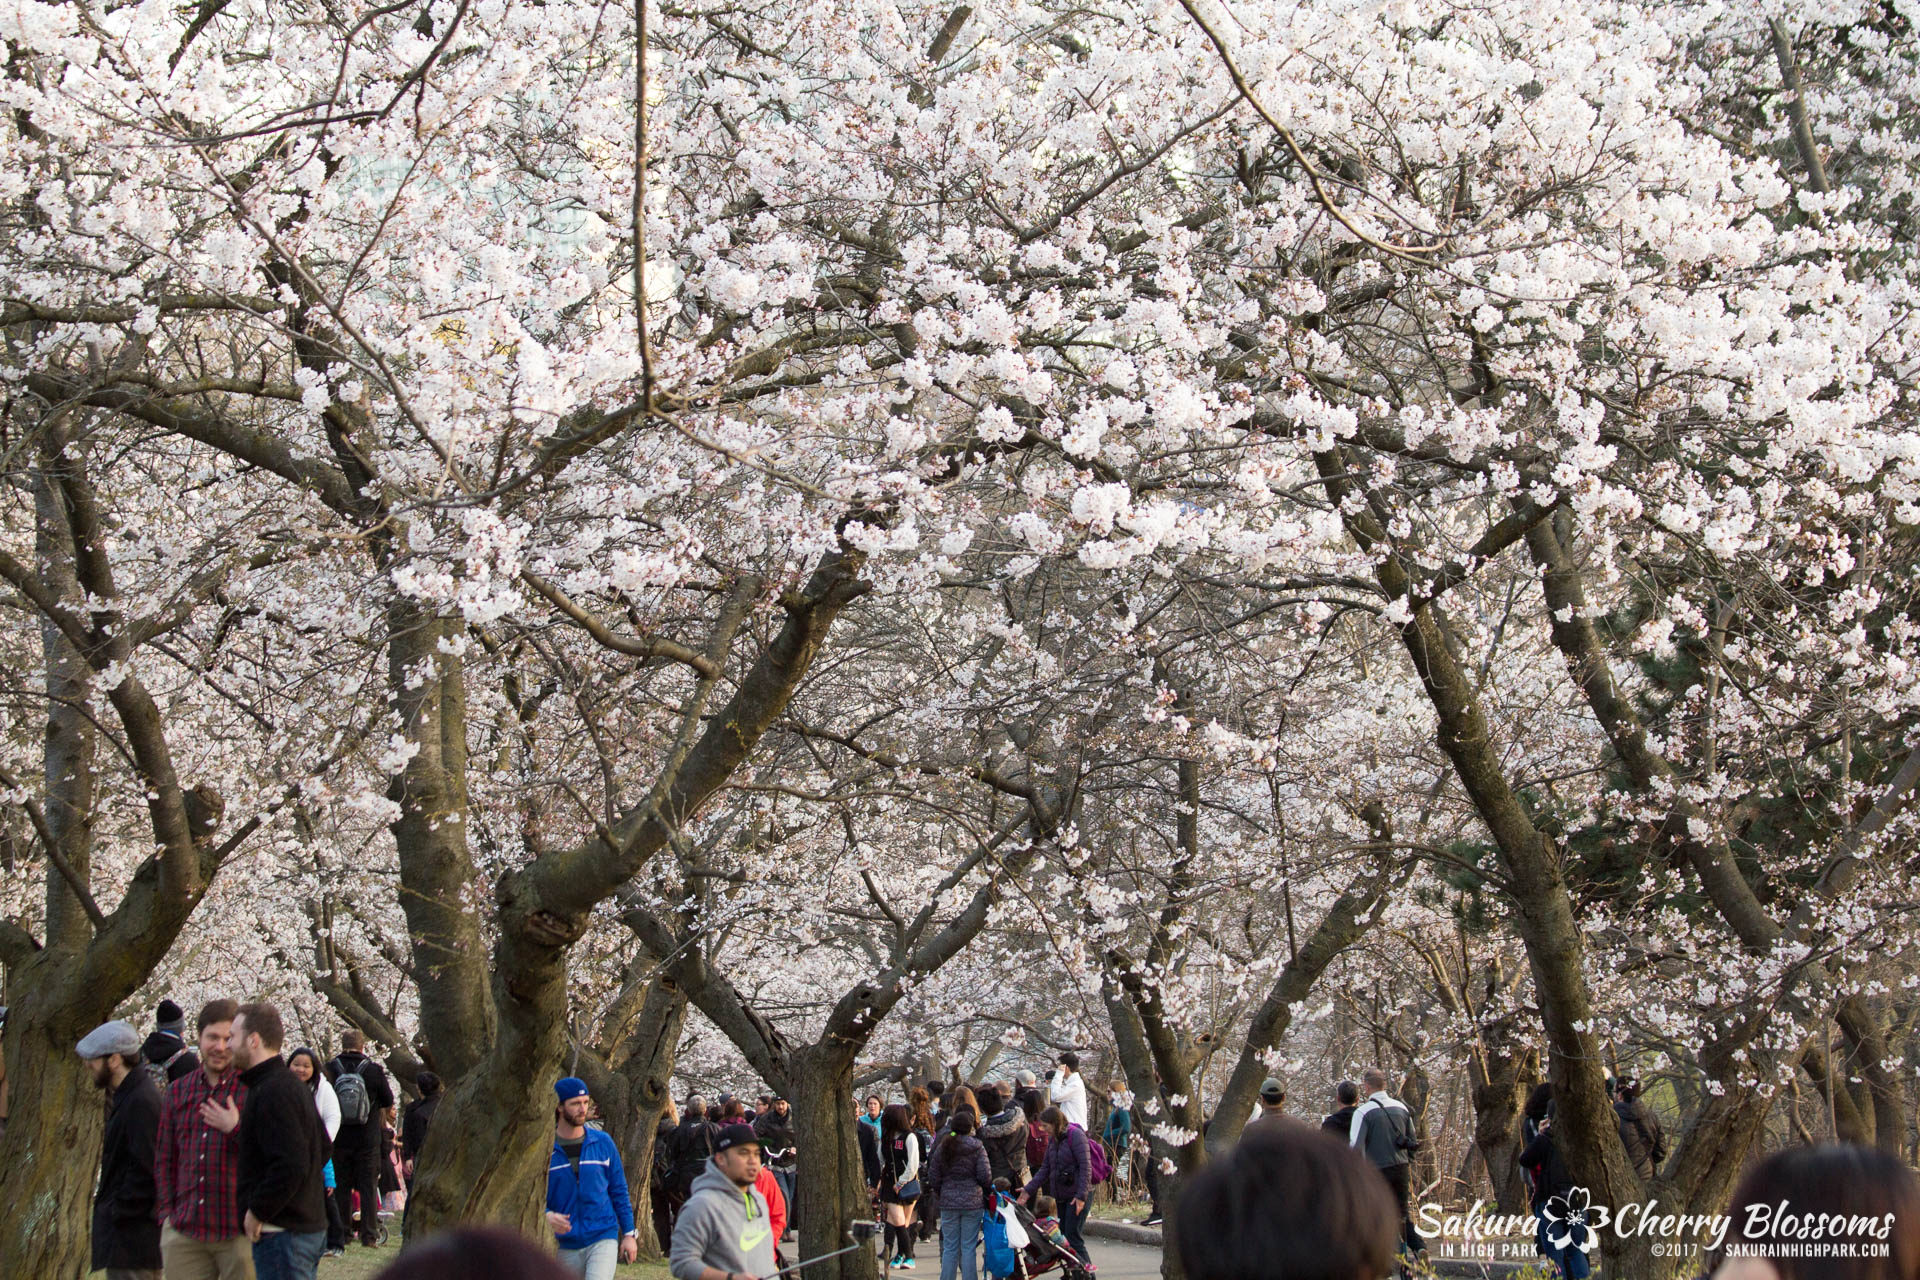 Sakura-Watch-April-24-2017-bloom-has-begun-with-more-to-come-146.jpg